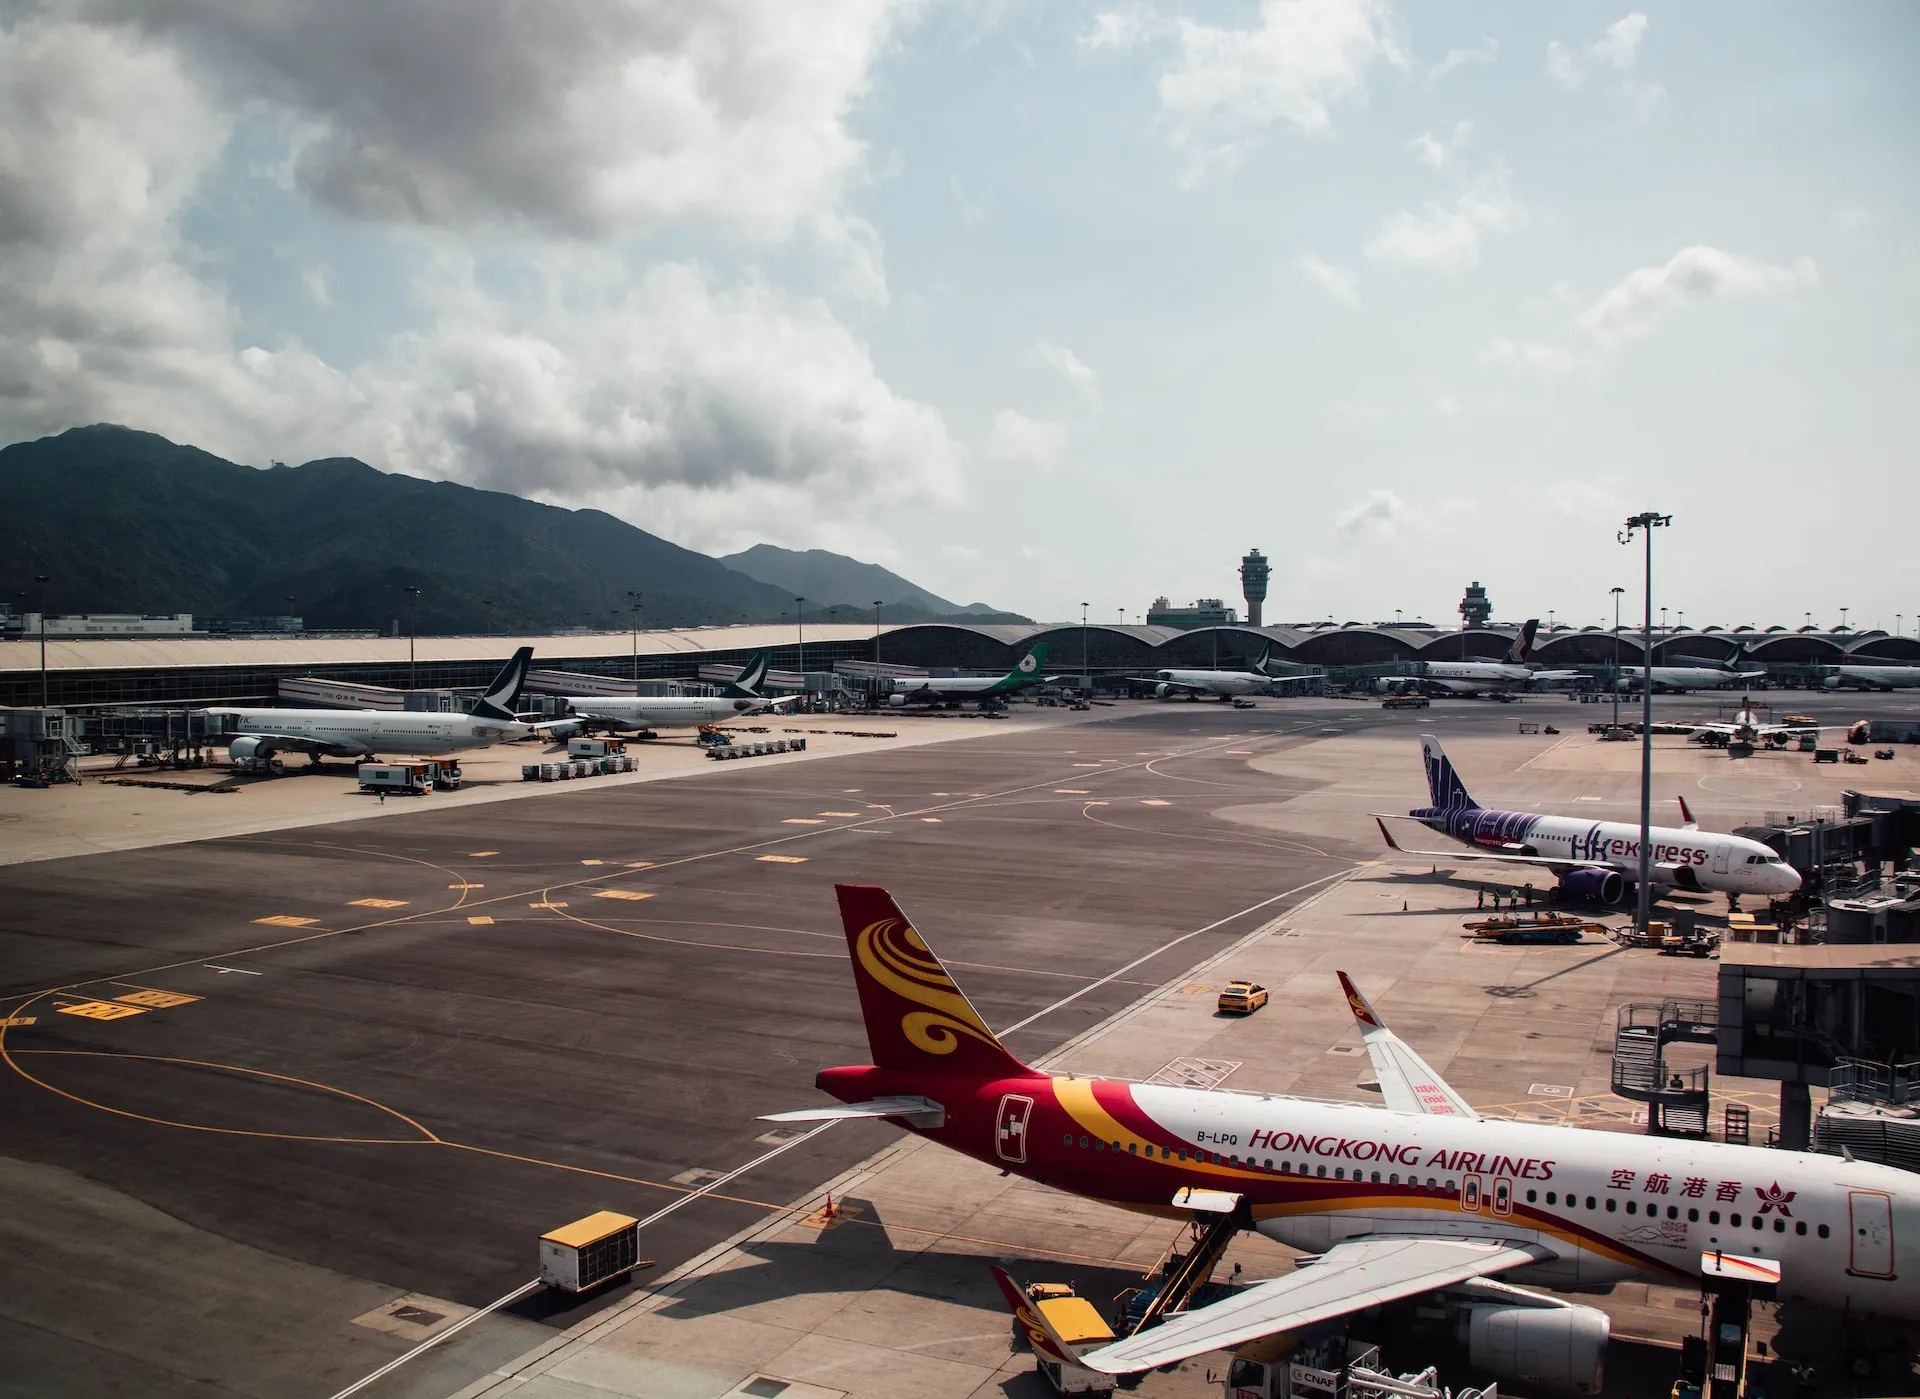 Hong Kong International Airport. Source: Photo by Ryan Le on Unsplash